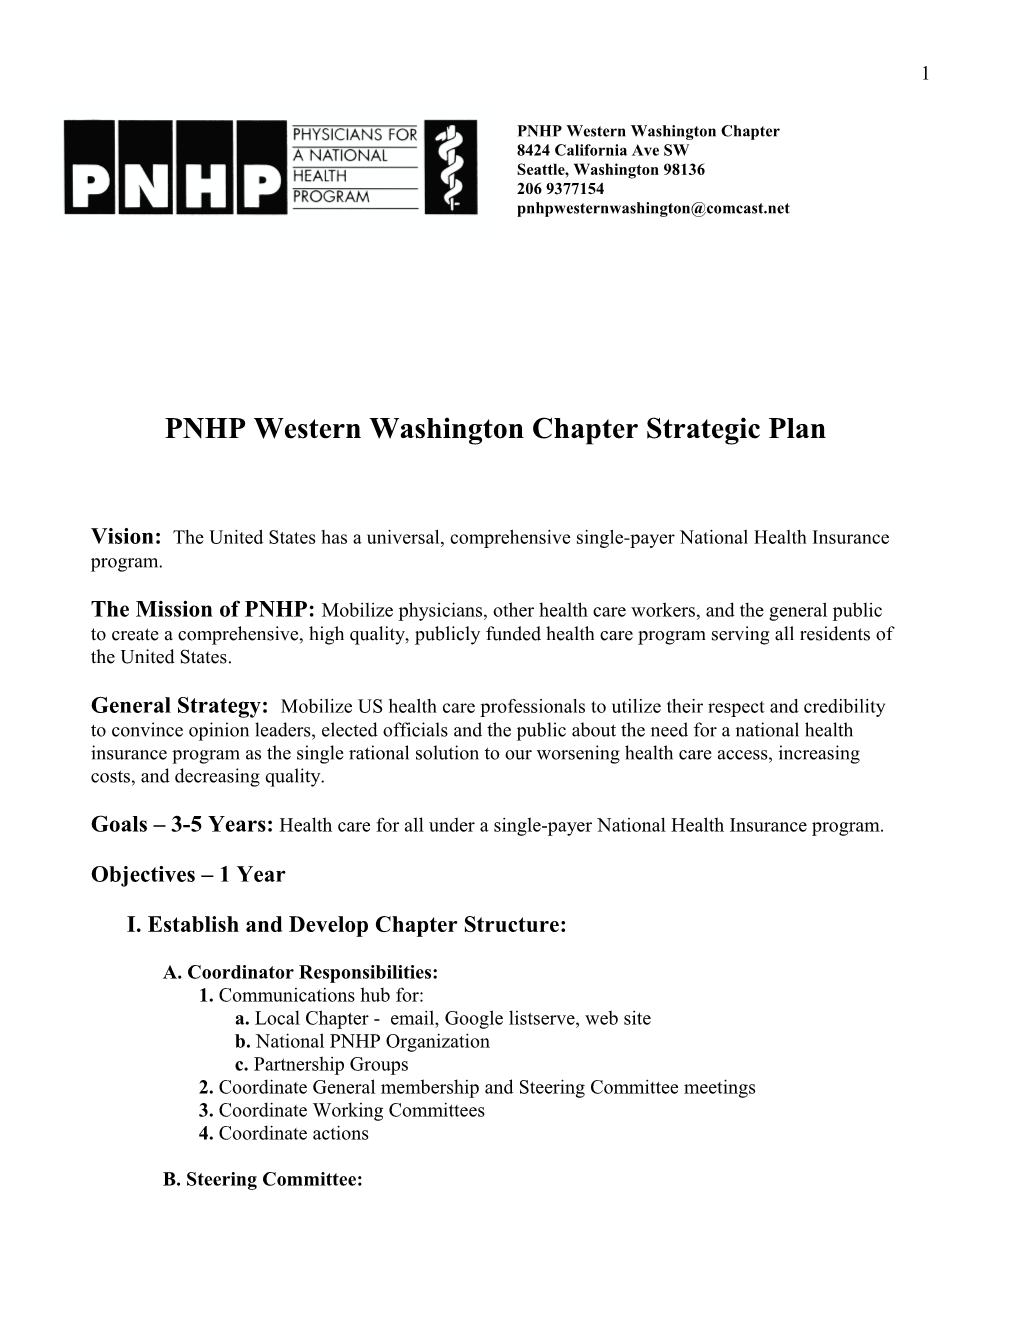 PNHP Strategic Plan (TERRY GARDINER)